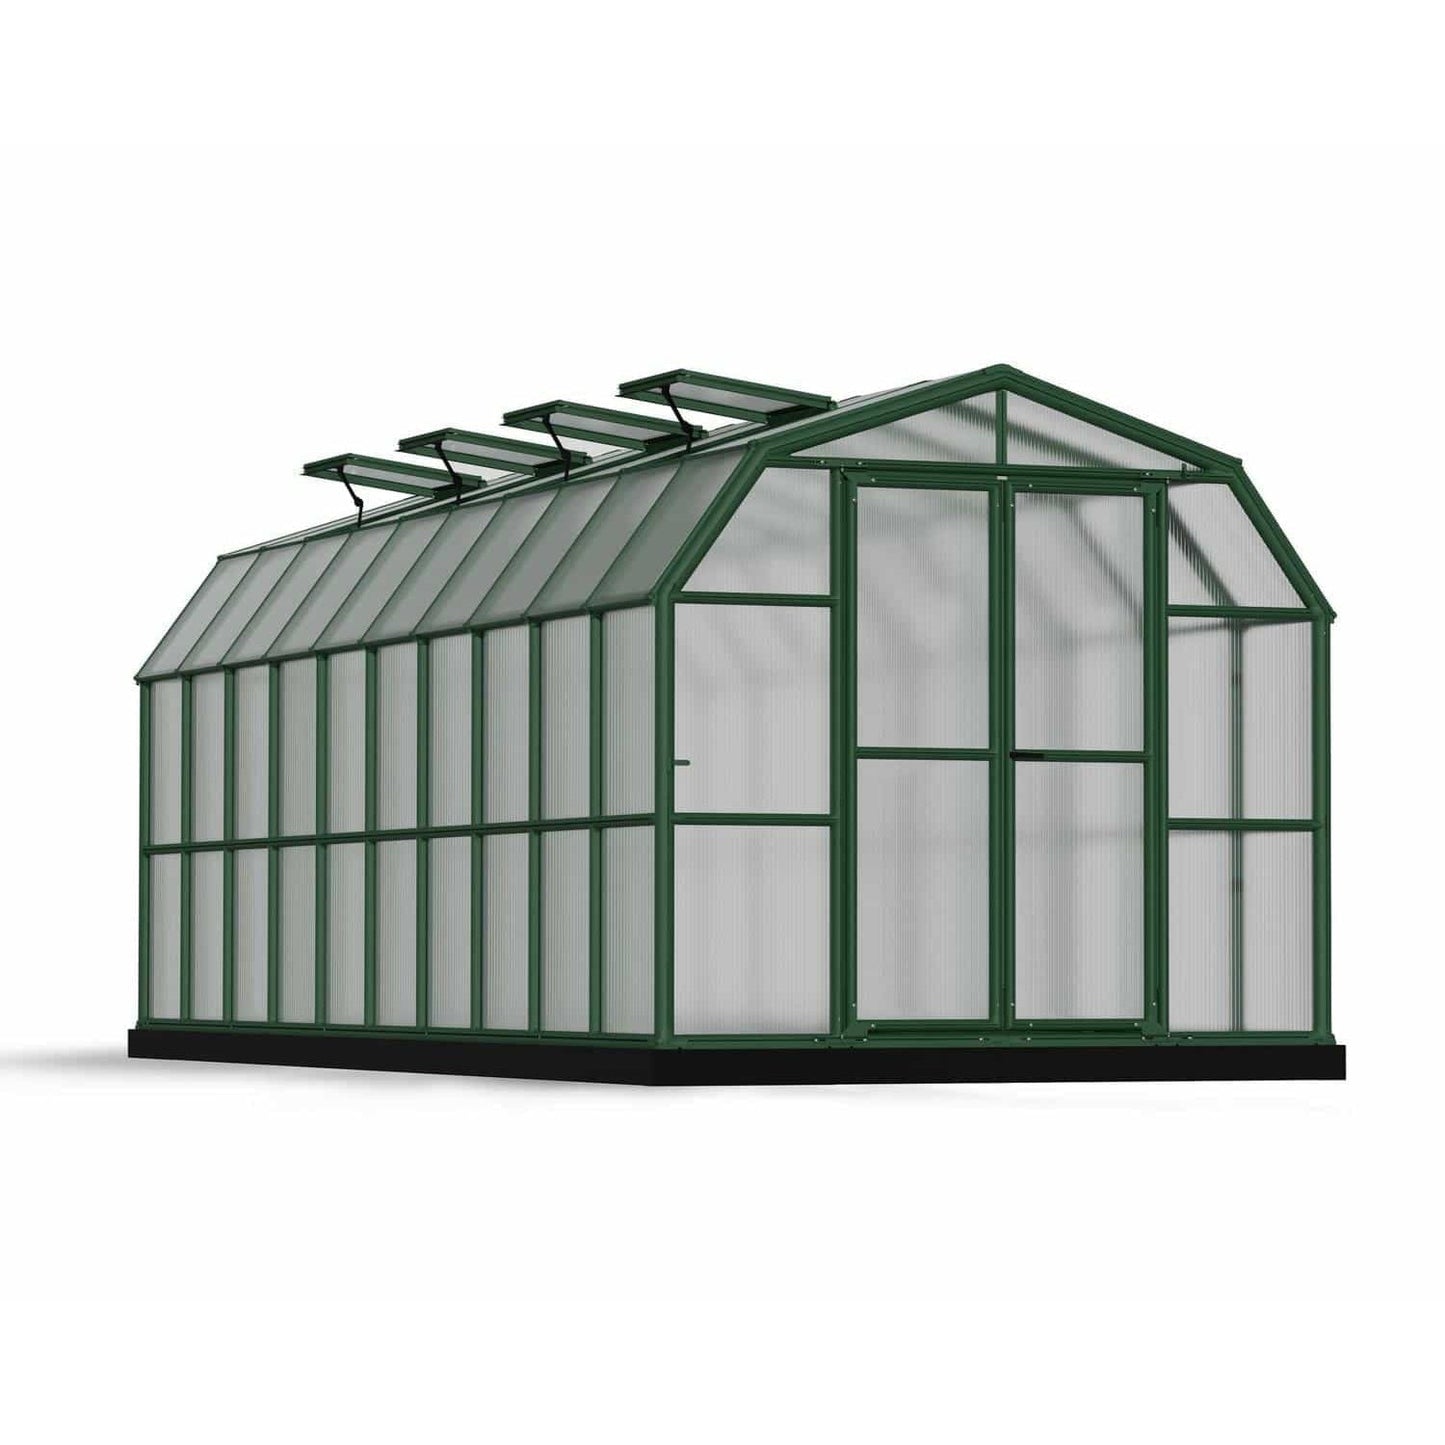 Rion Grand Gardener Greenhouse 8 x 20 ft. - Delightful Yard